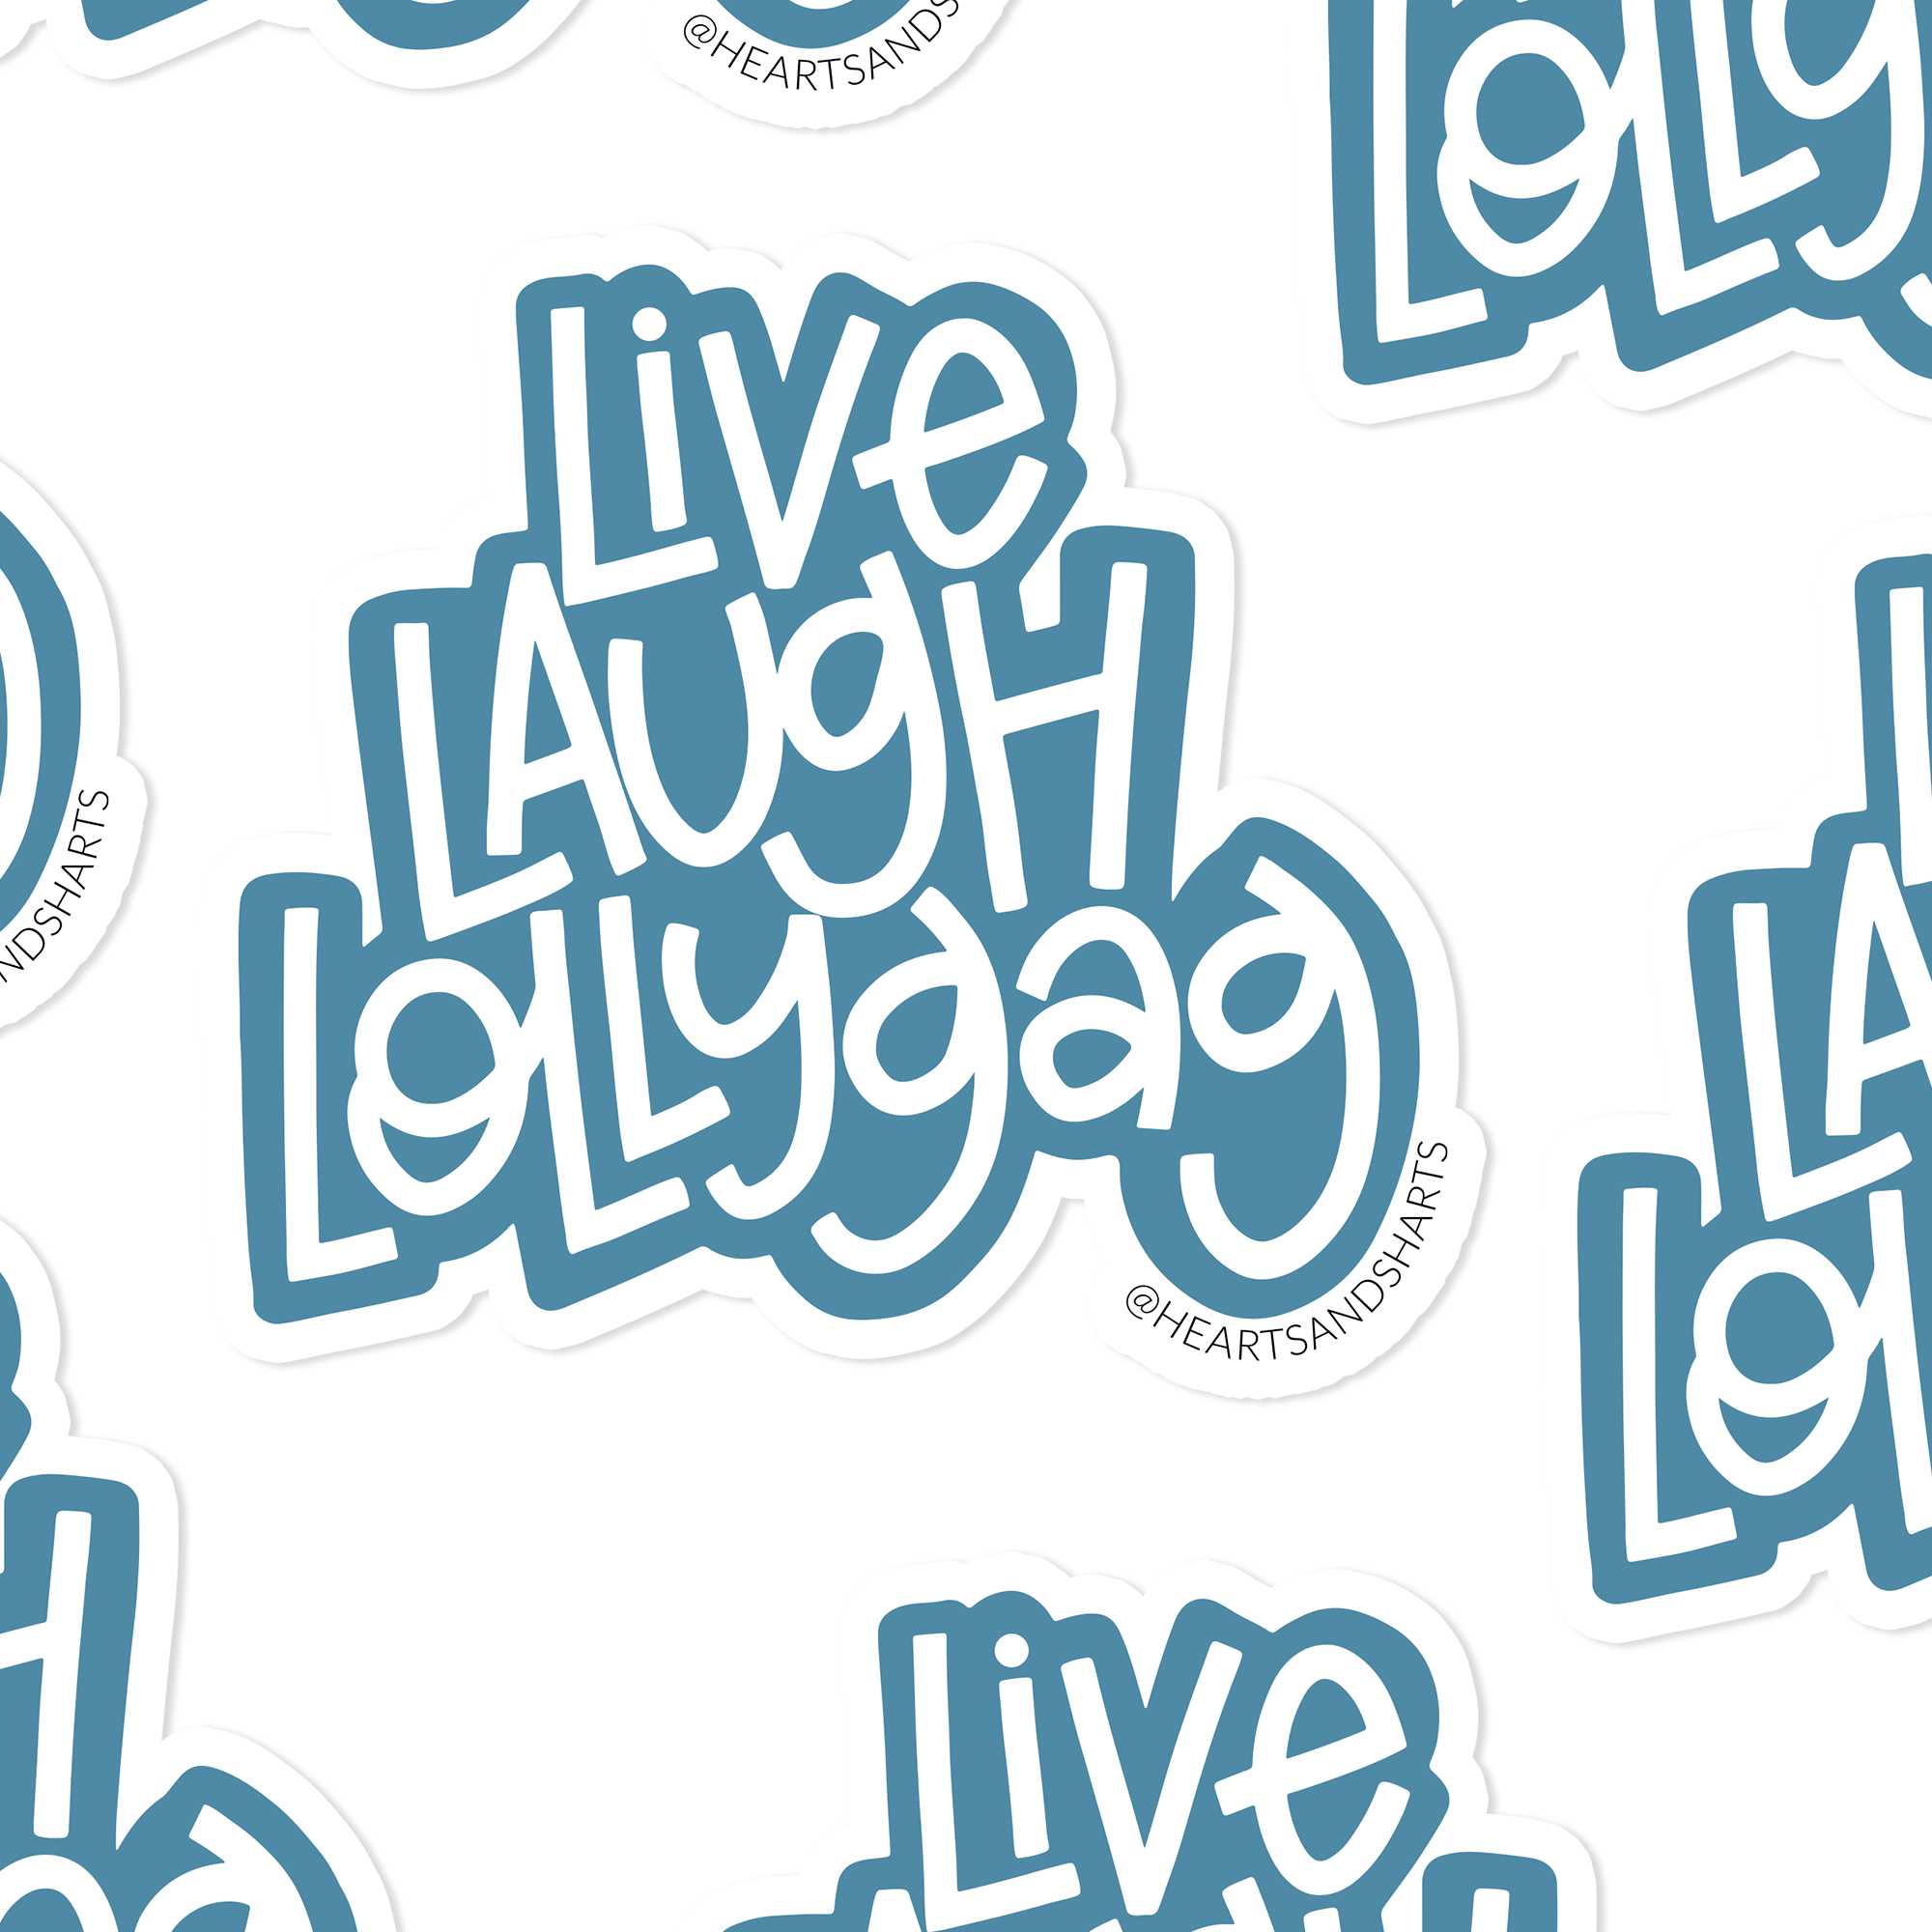 lollygag // sticker